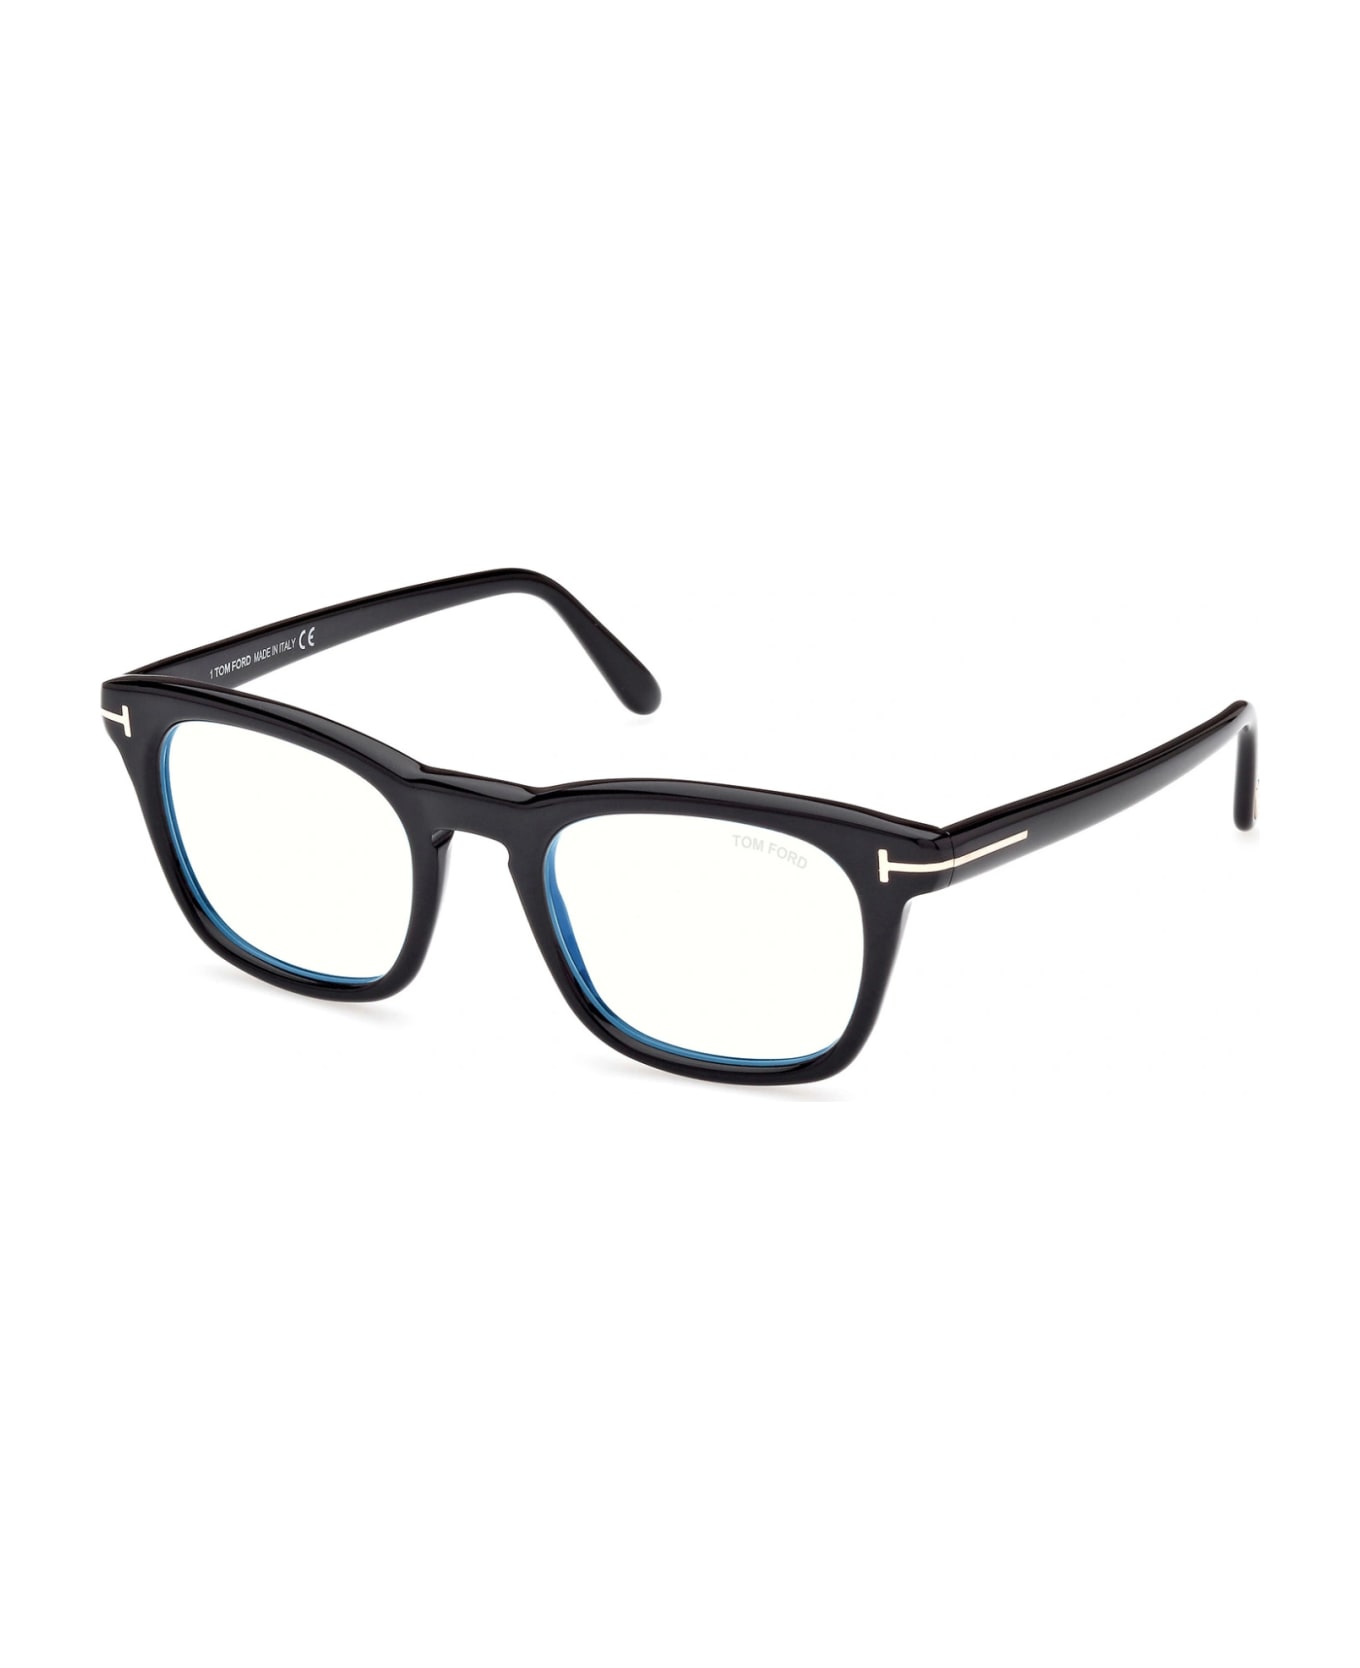 Tom Ford Eyewear TF5870 001 Glasses